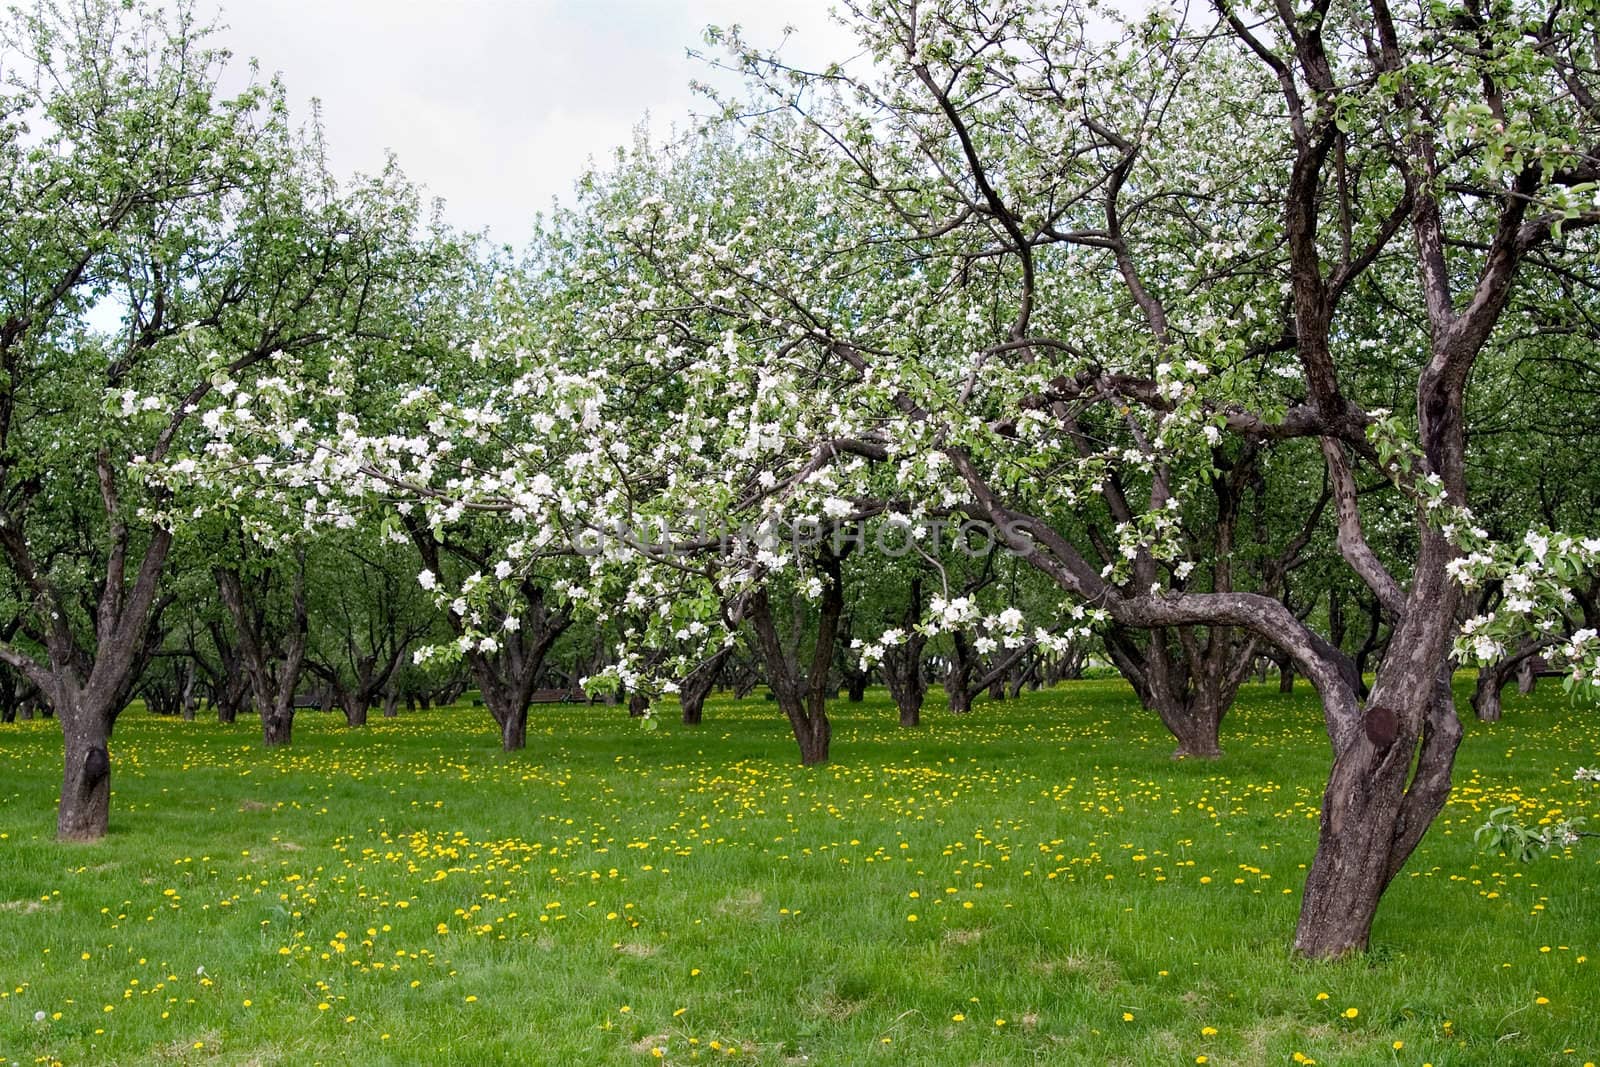 Apple Blossom 2 by Sergius